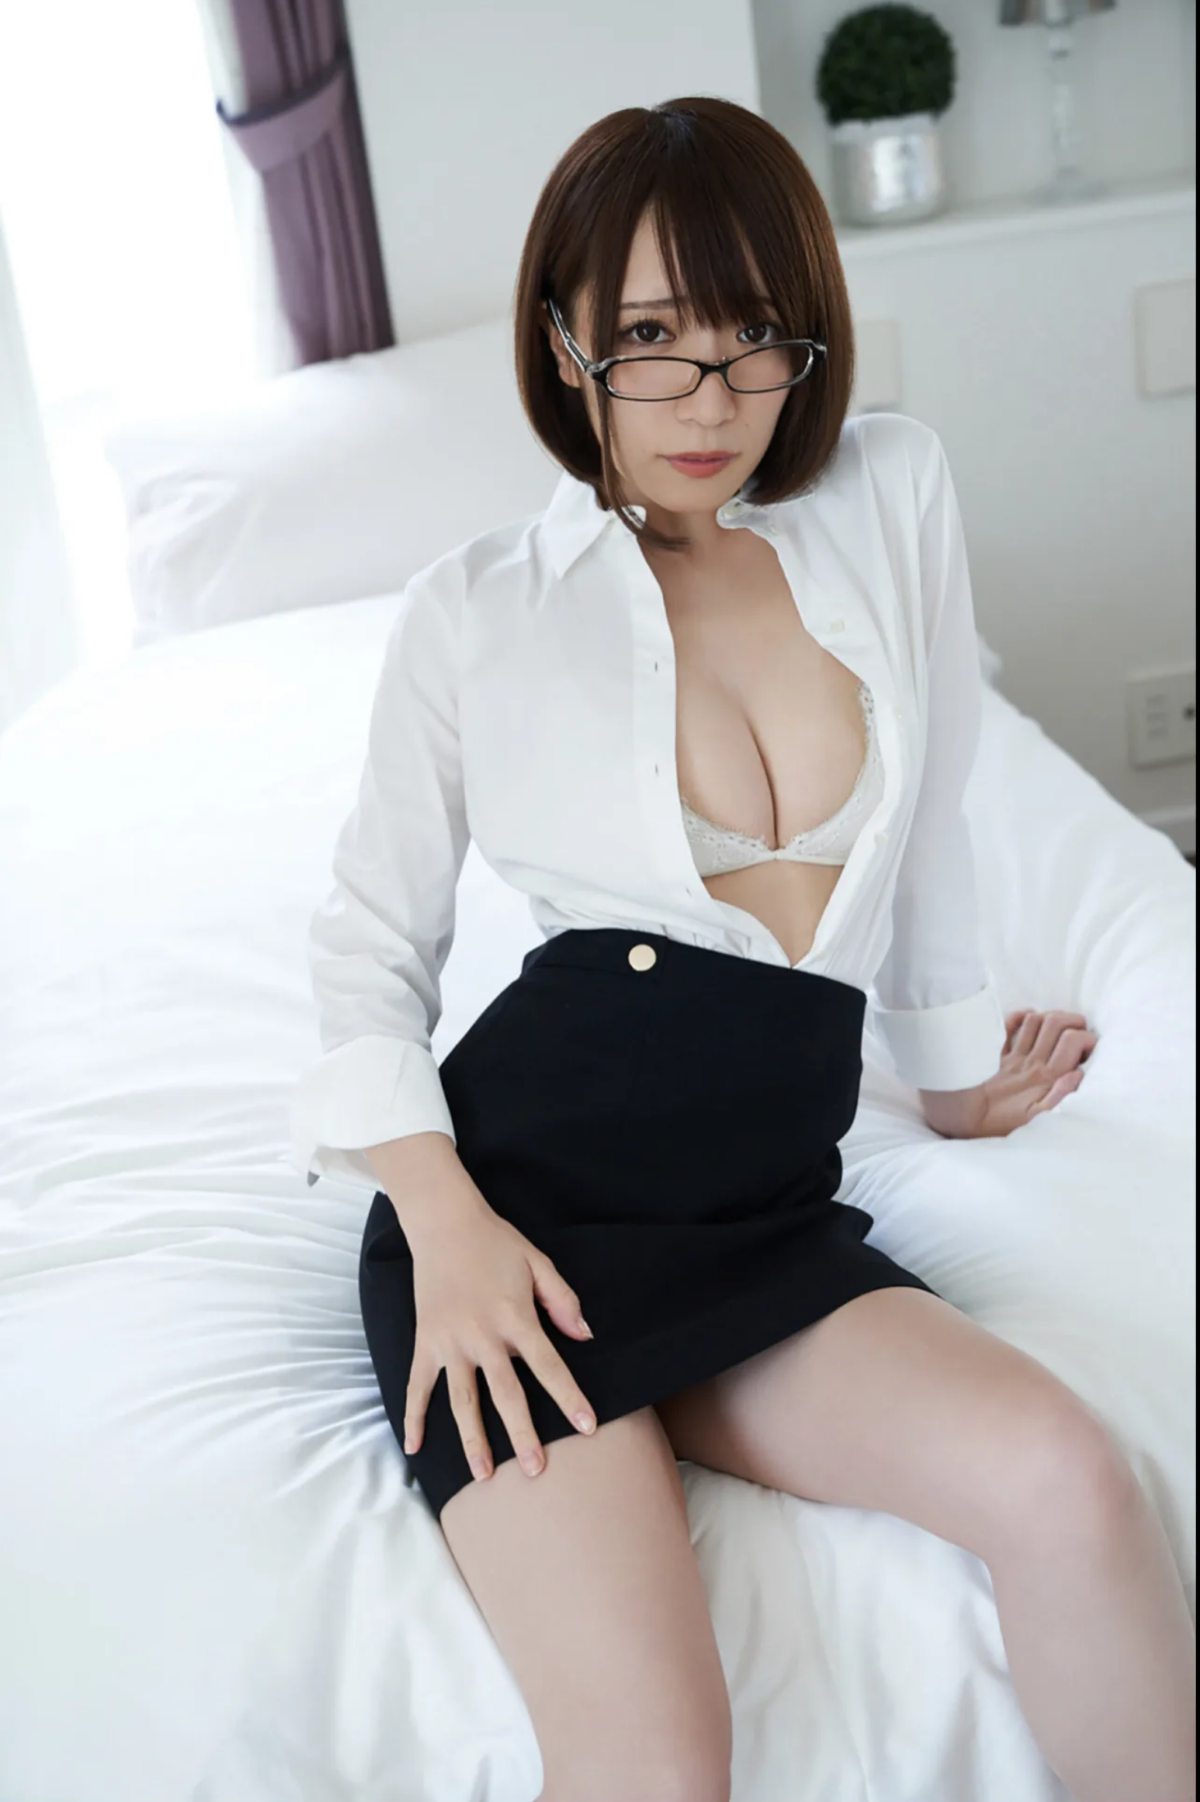 FRIDAY Digital Photobook Airi Shimizu 清水あいり Too erotic body Vol 3 エロすぎるカラダ Vol 3 2021 04 30 0012 1391889866.jpg